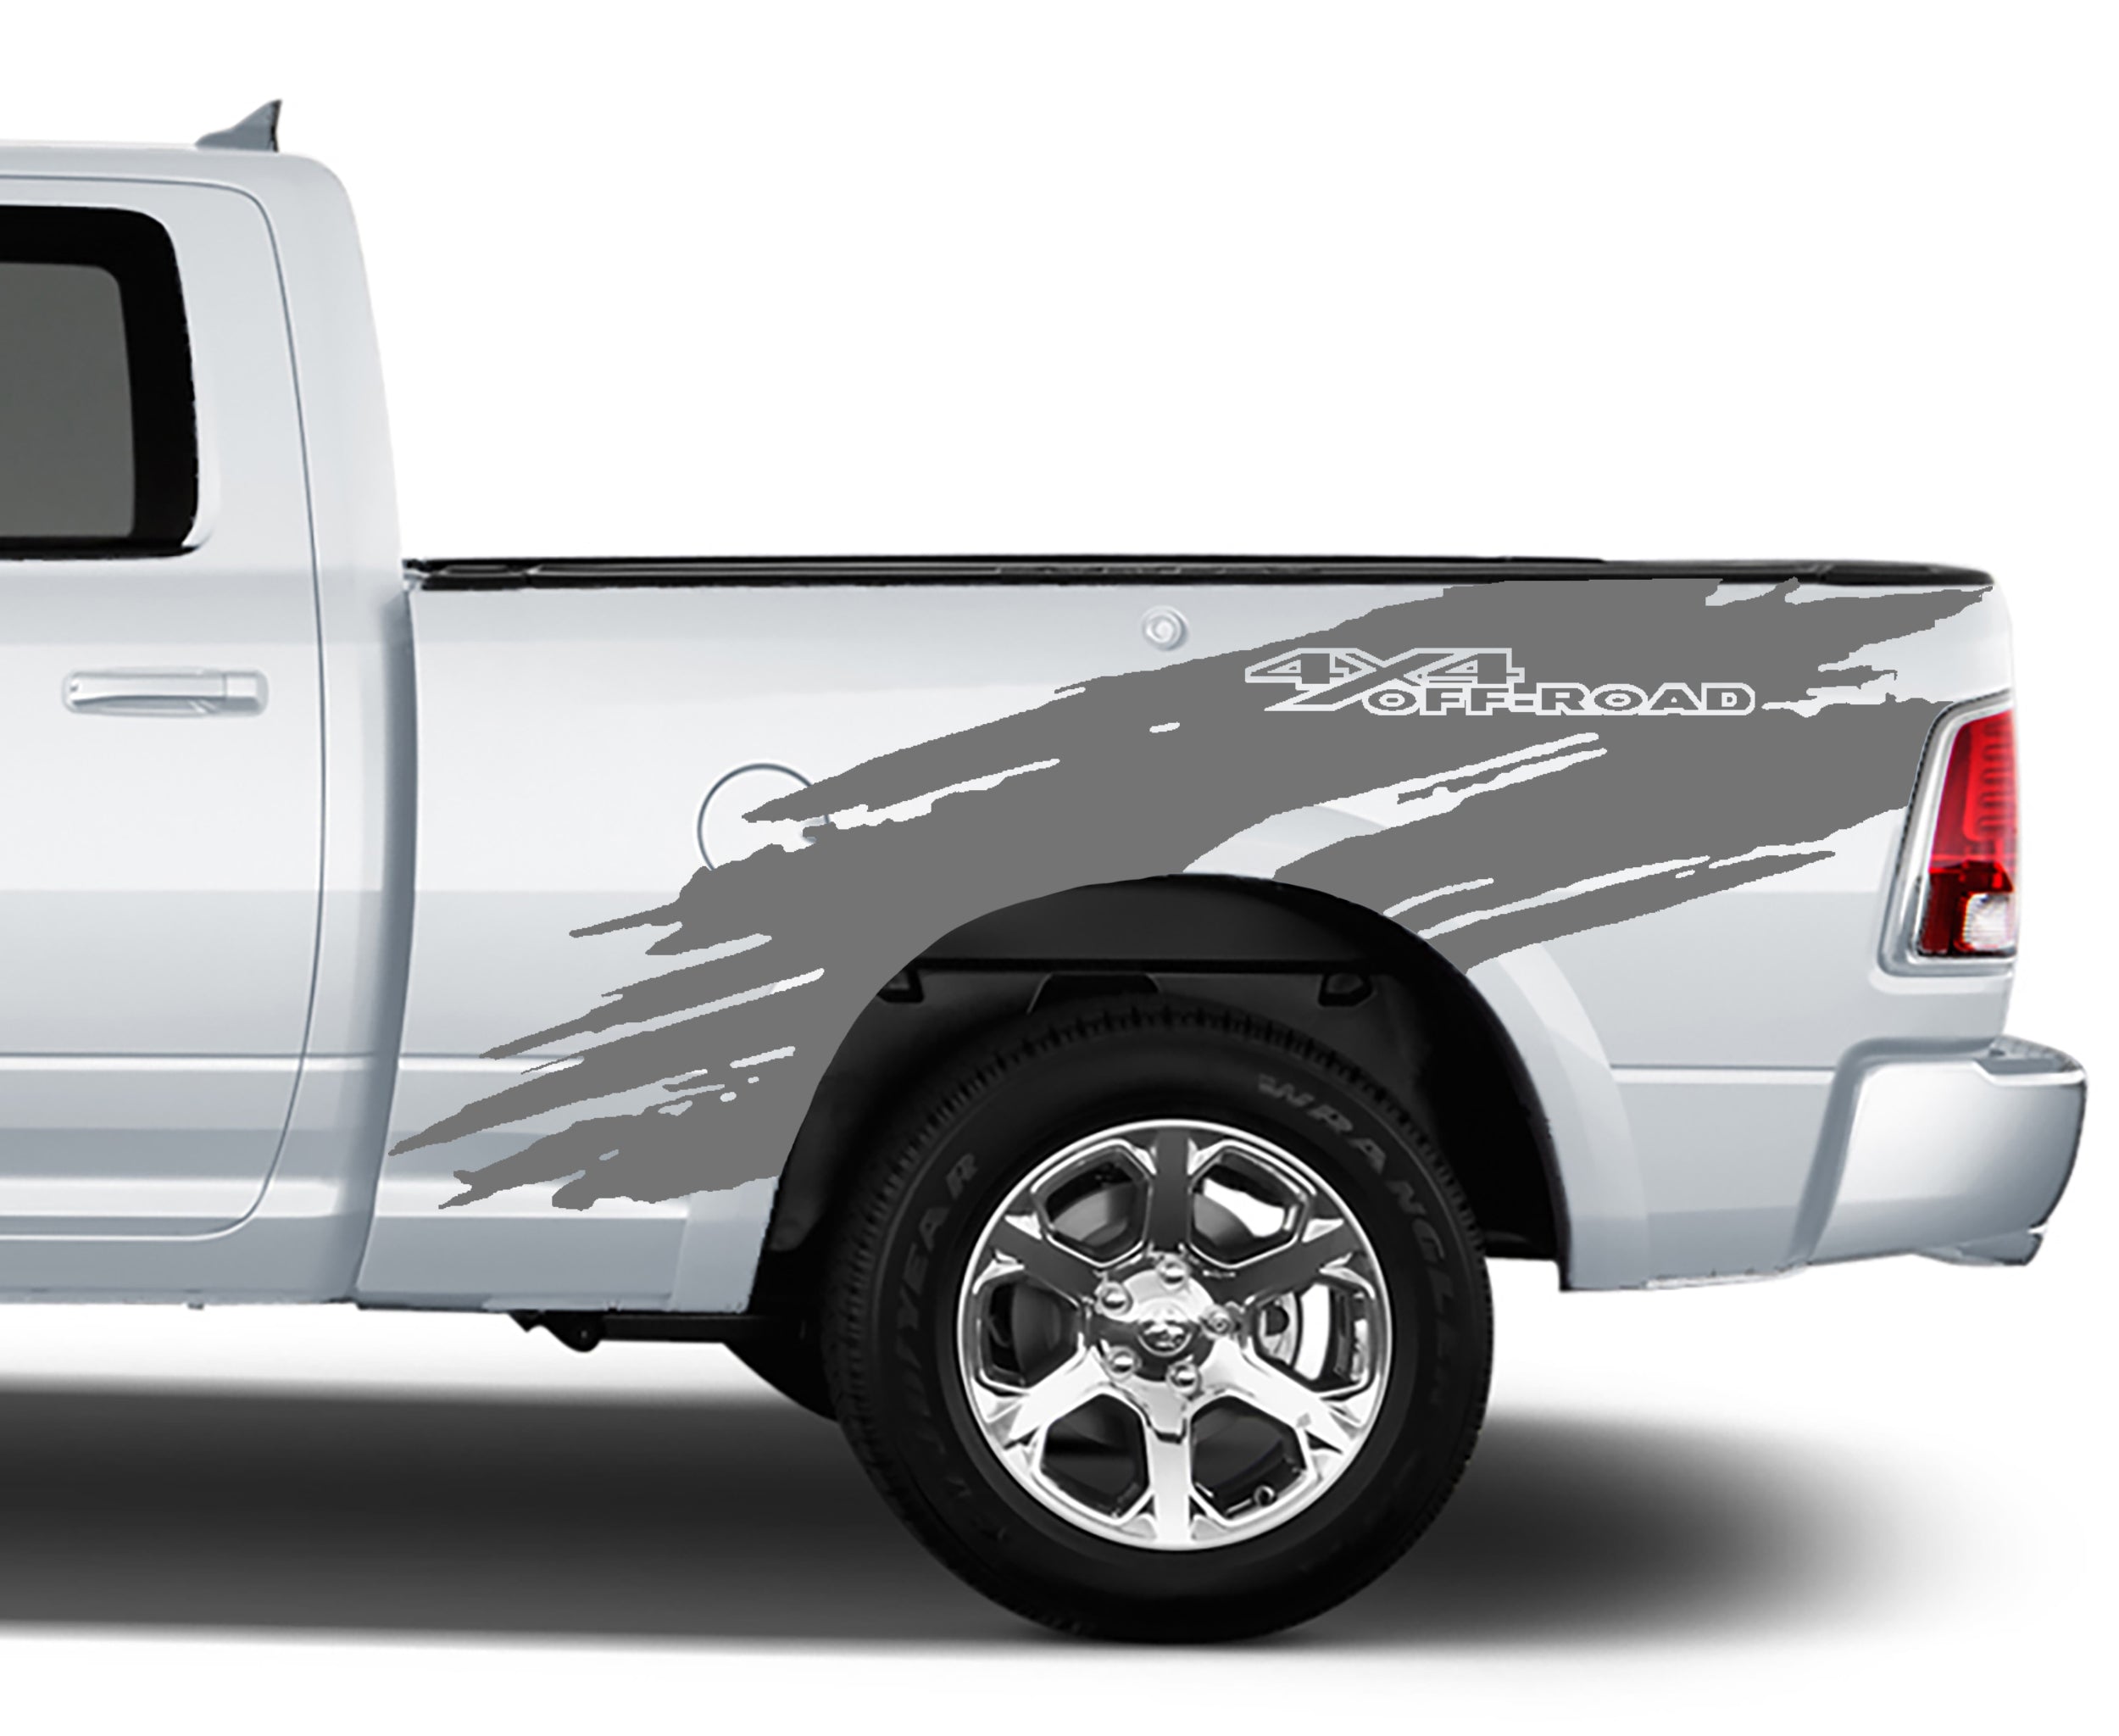 4×4 Off Road Truck Splash side bed Graphics Decals for Ford Ranger